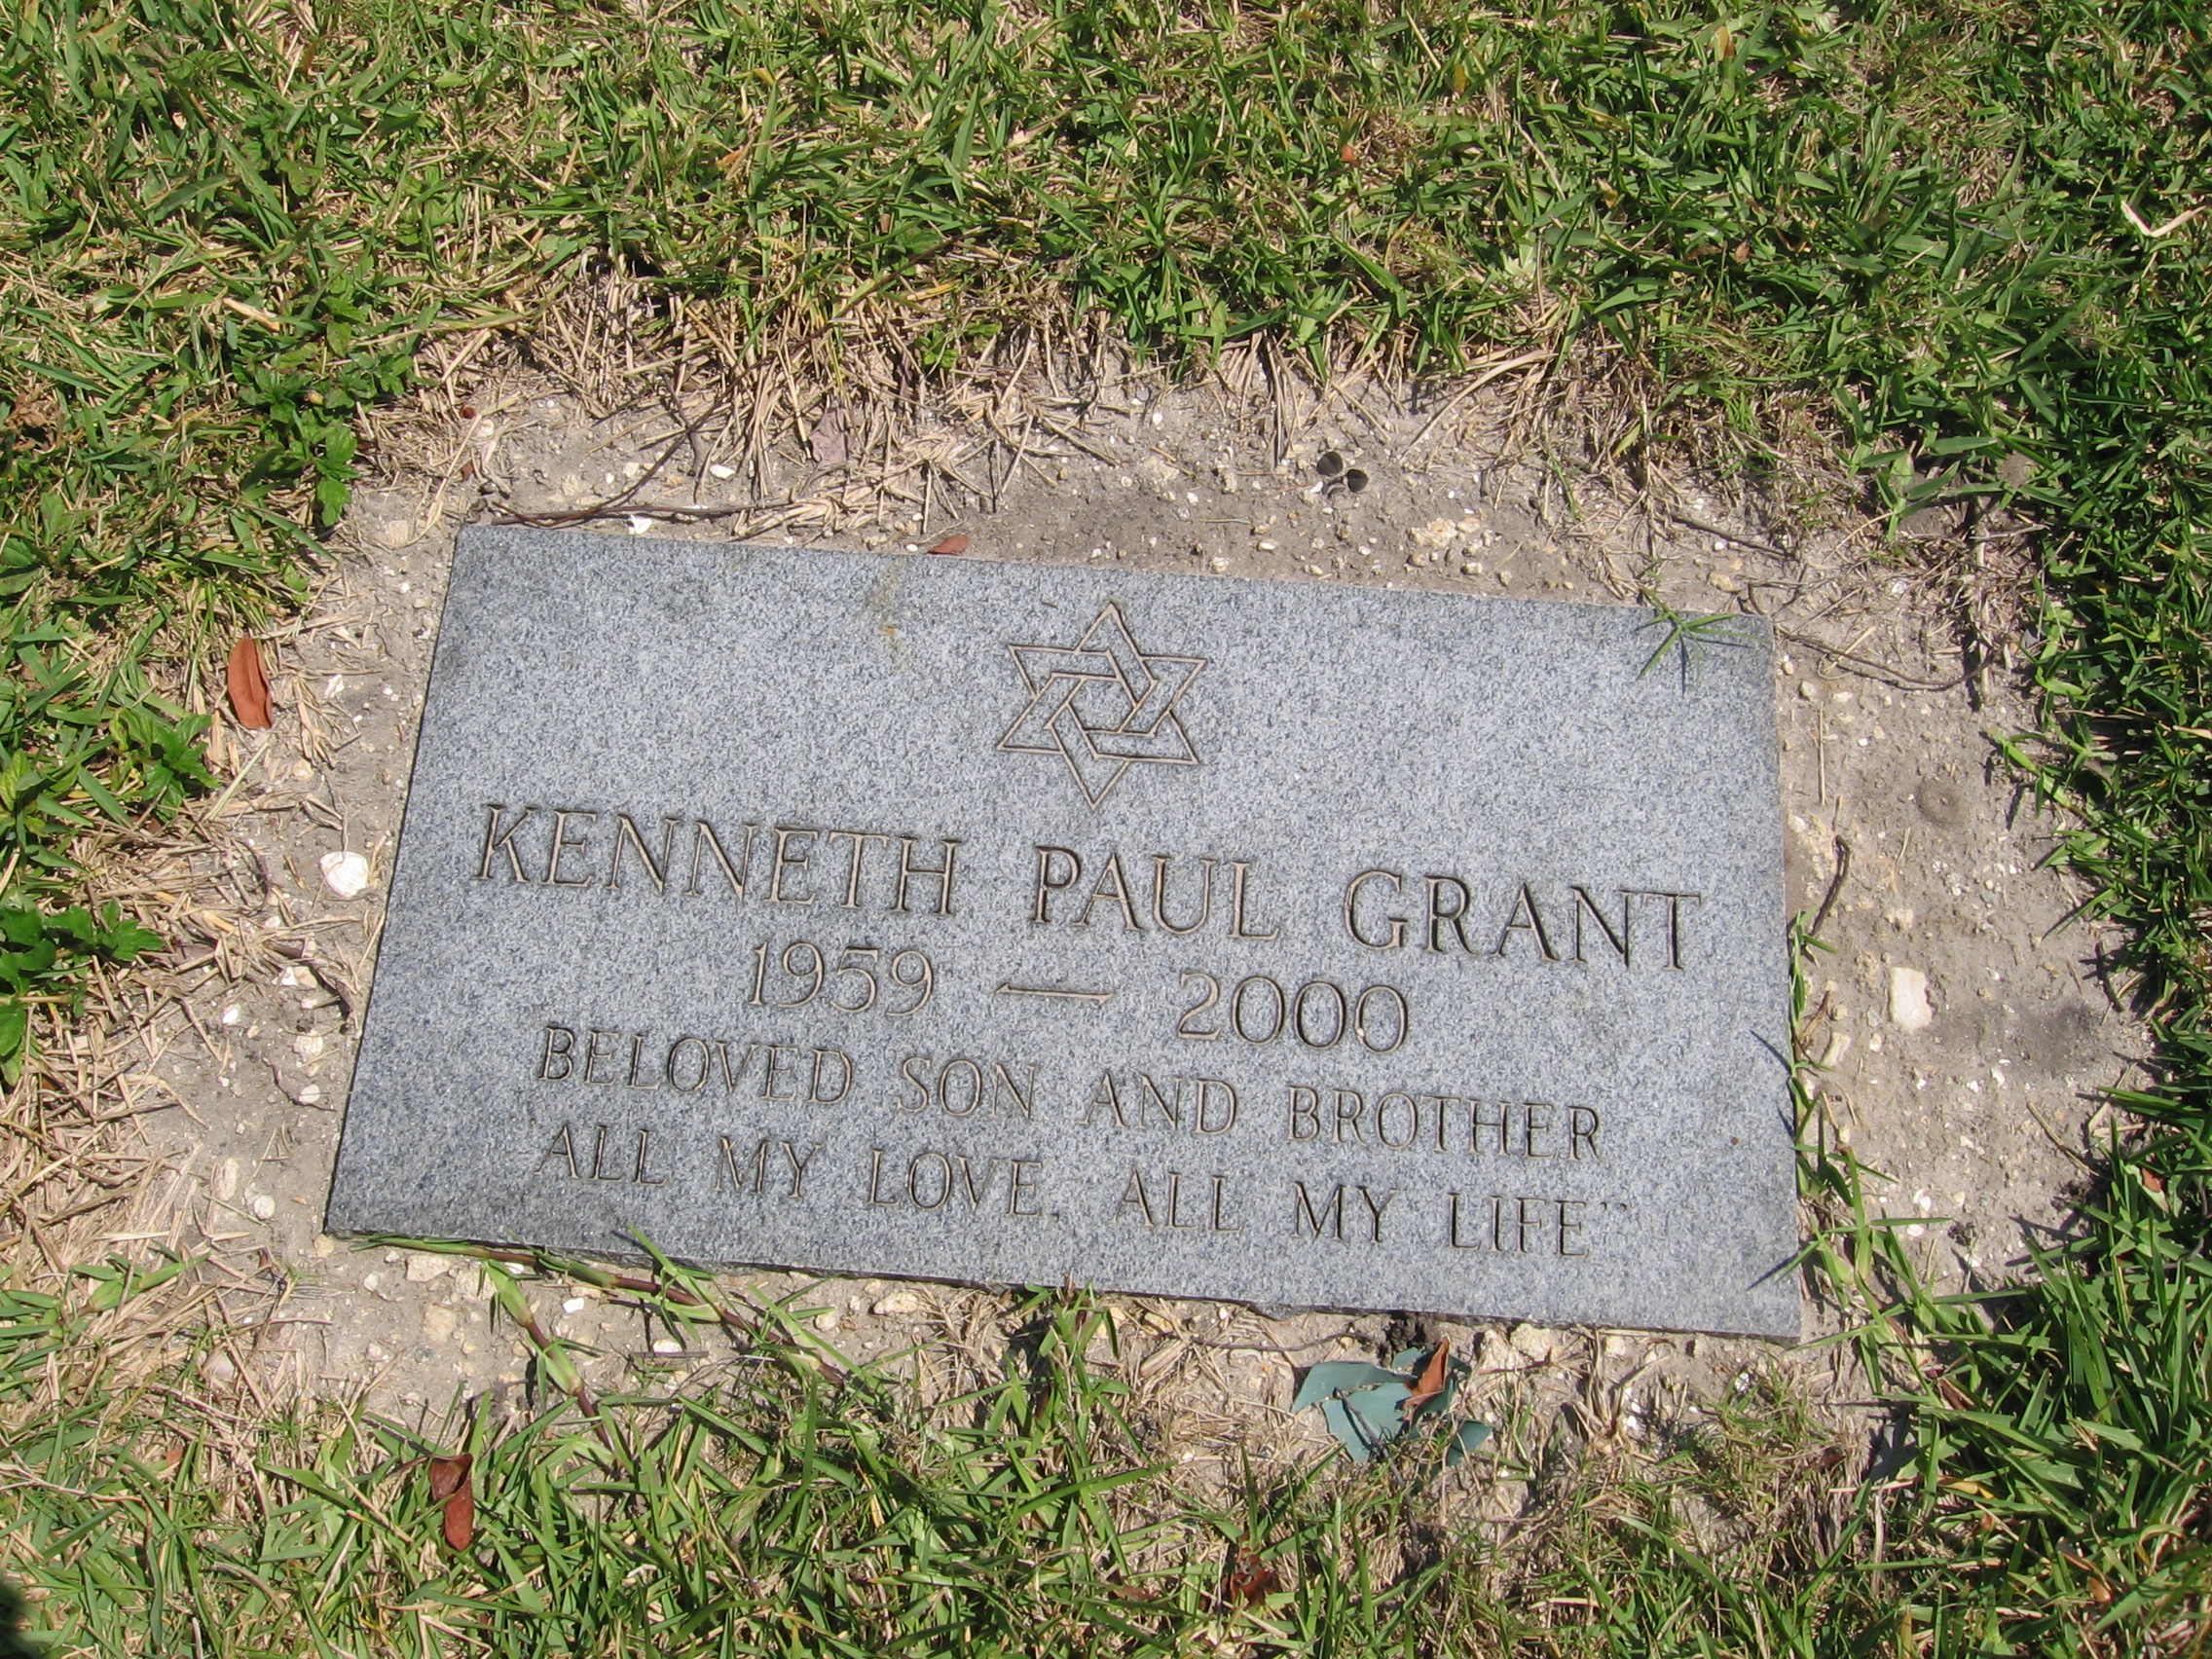 Kenneth Paul Grant